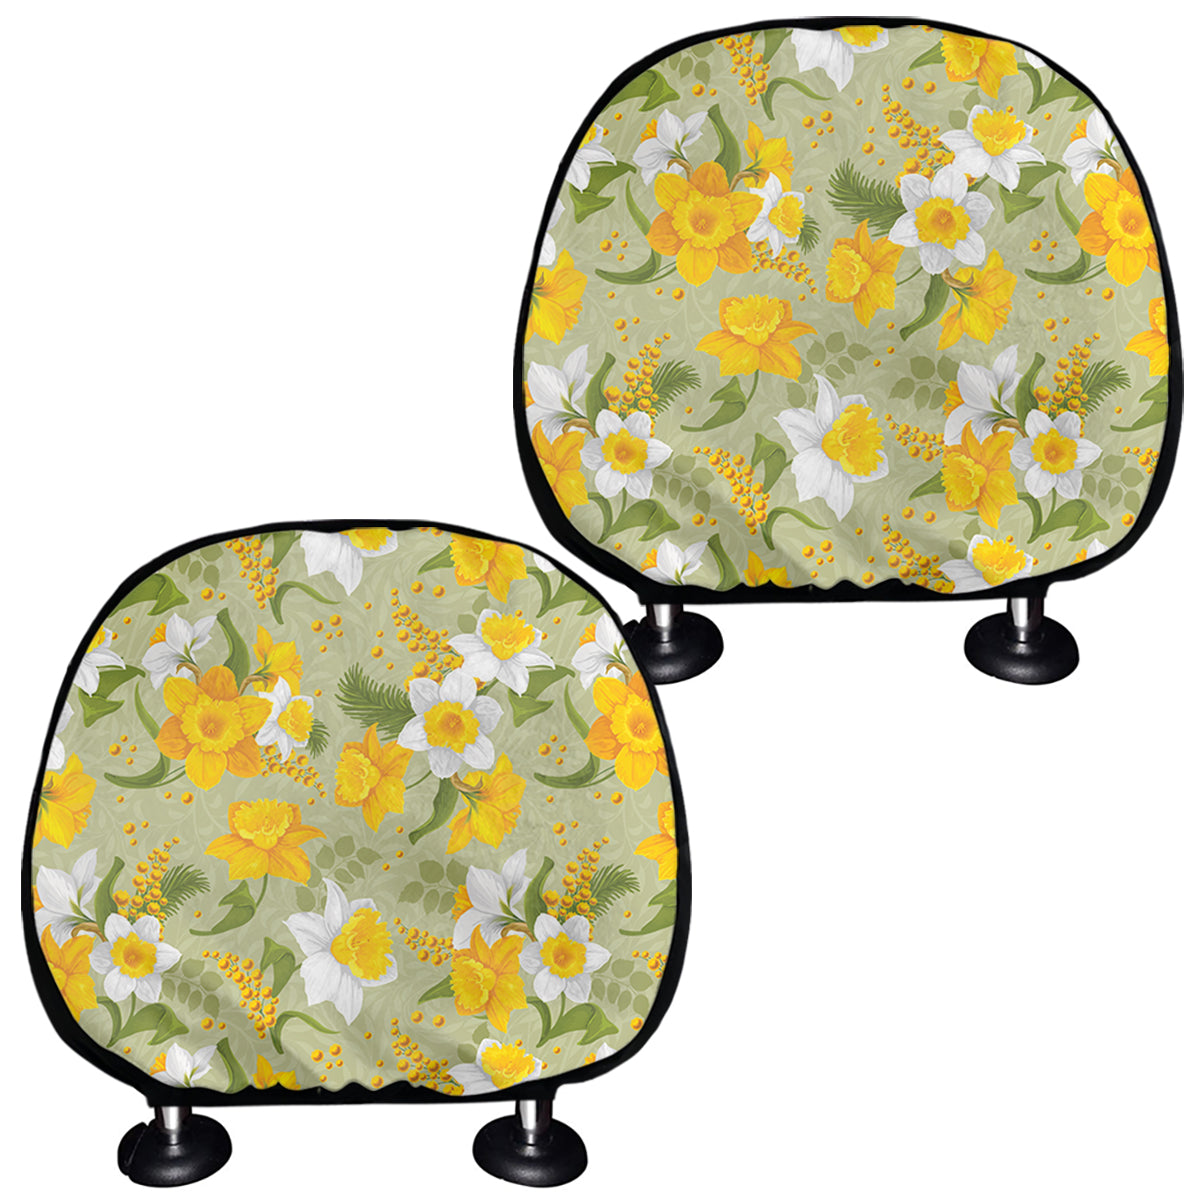 Vintage Daffodil Flower Pattern Print Car Headrest Covers